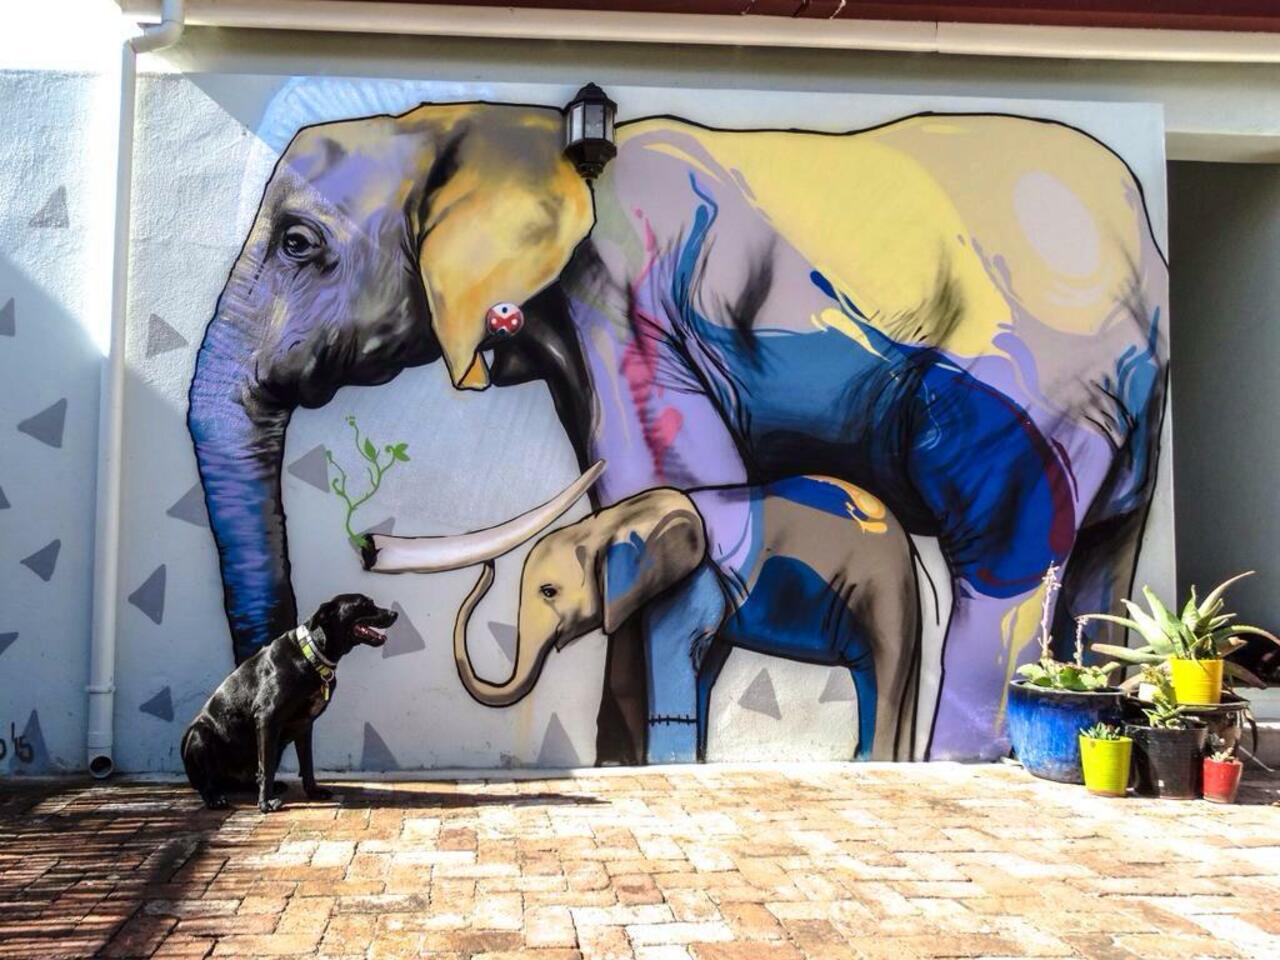 Latest nature in Street Art piece by Falko Paints In Cape Town

#art #mural #graffiti #streetart http://t.co/uU5ncM6Jwn